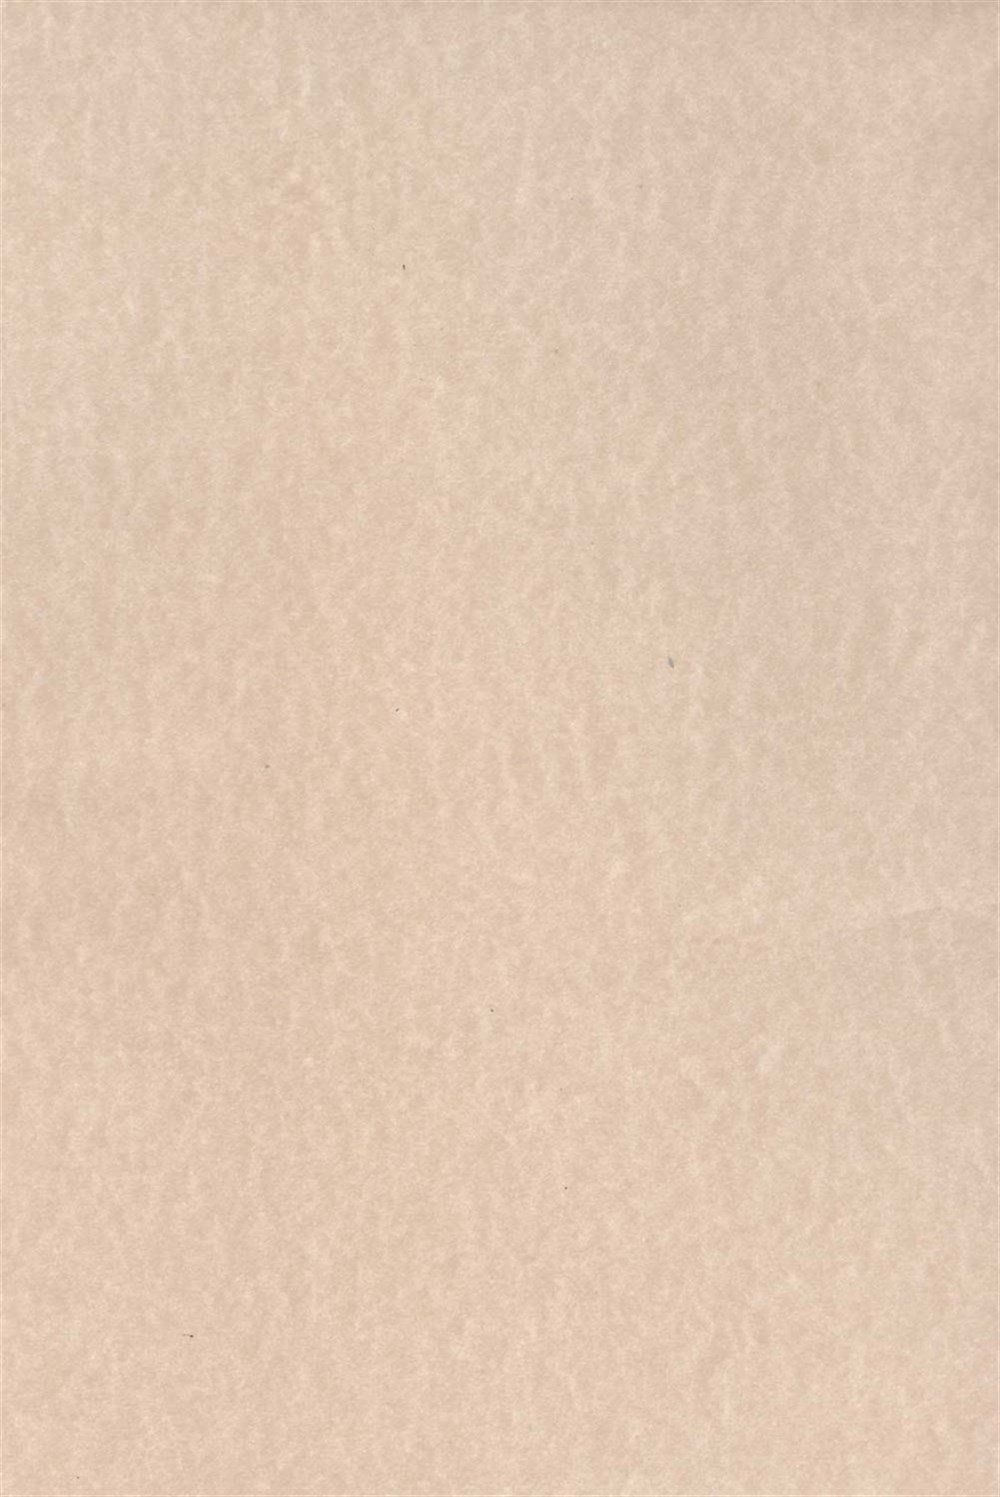 Moorman Asitsiz Kağıt  Kahverengi  Mermer Desenli 65x92 cm. 90 Gr.